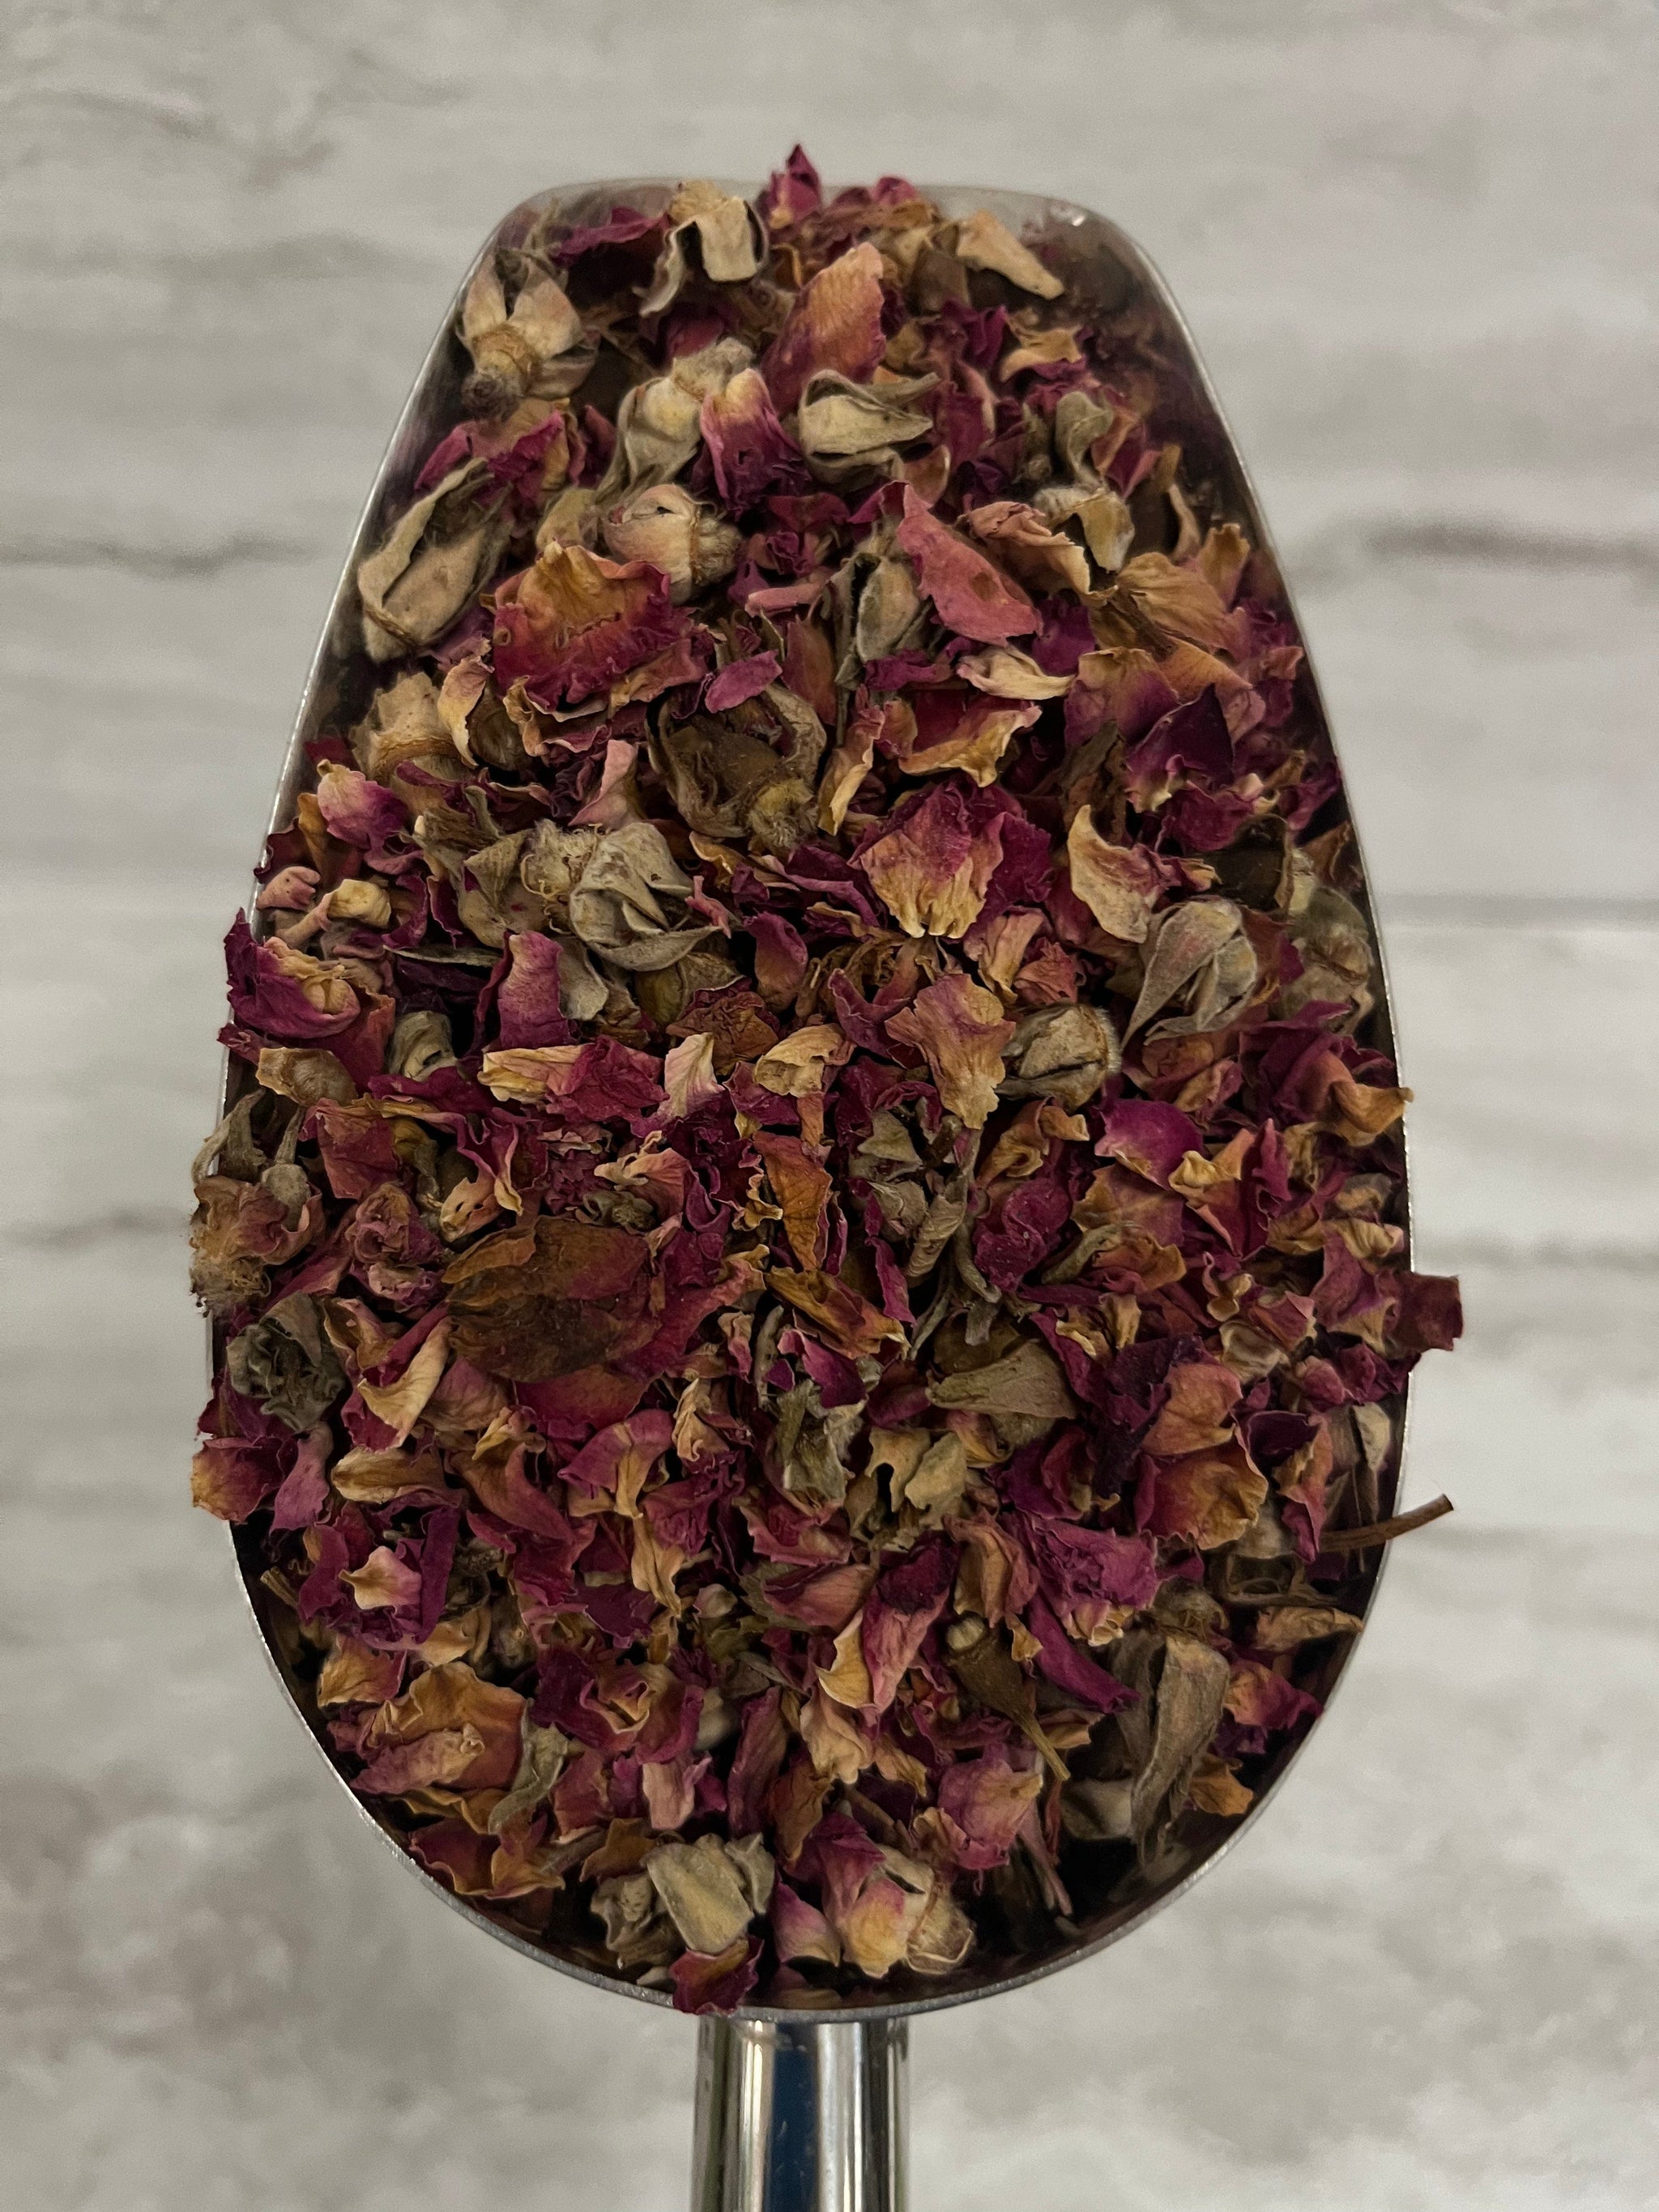 Rose Petals, Red - 1 lb Bulk - Organic | Mountain Rose Herbs